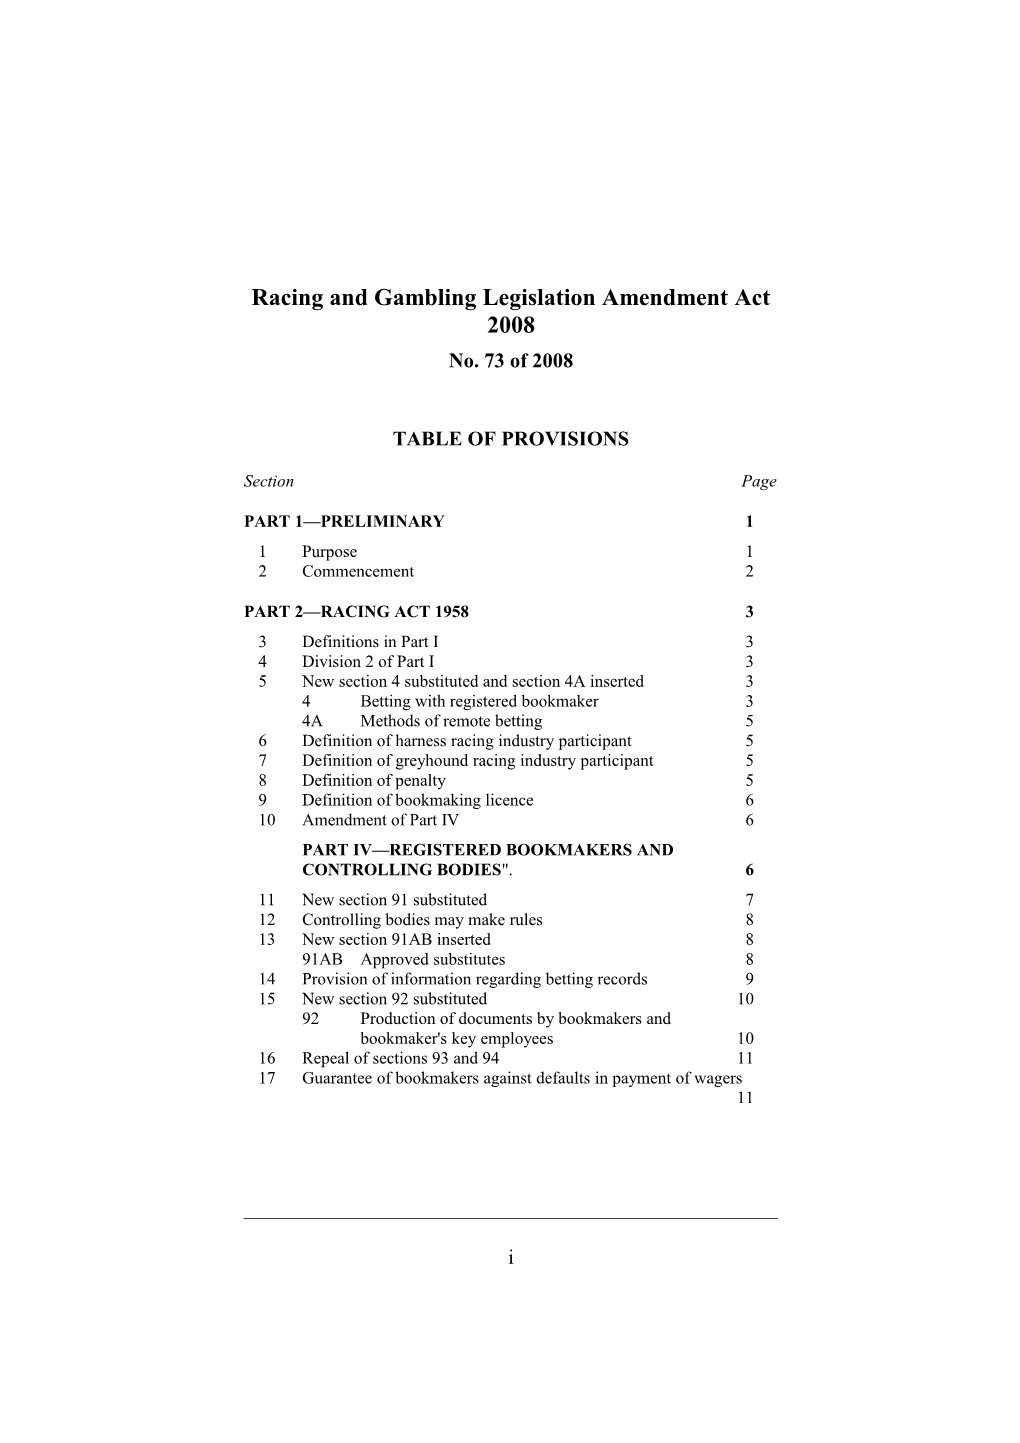 Racing and Gambling Legislation Amendment Act 2008